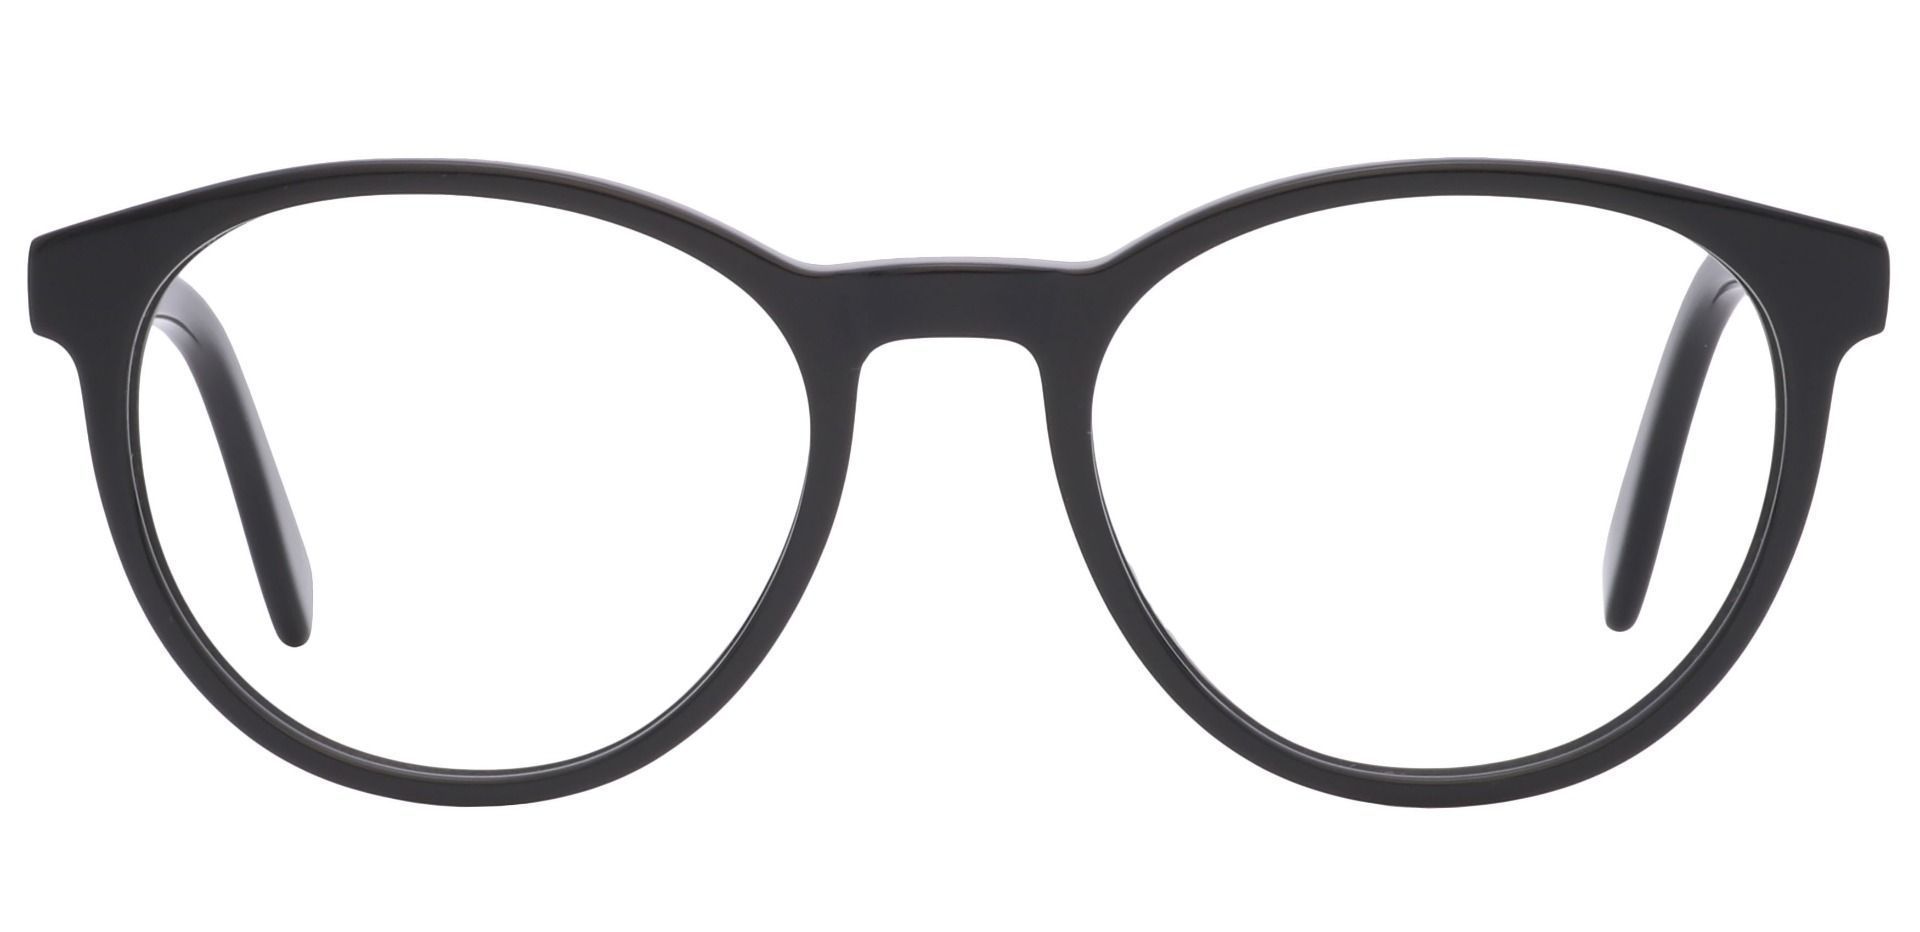 Stellar Oval Prescription Glasses - Black